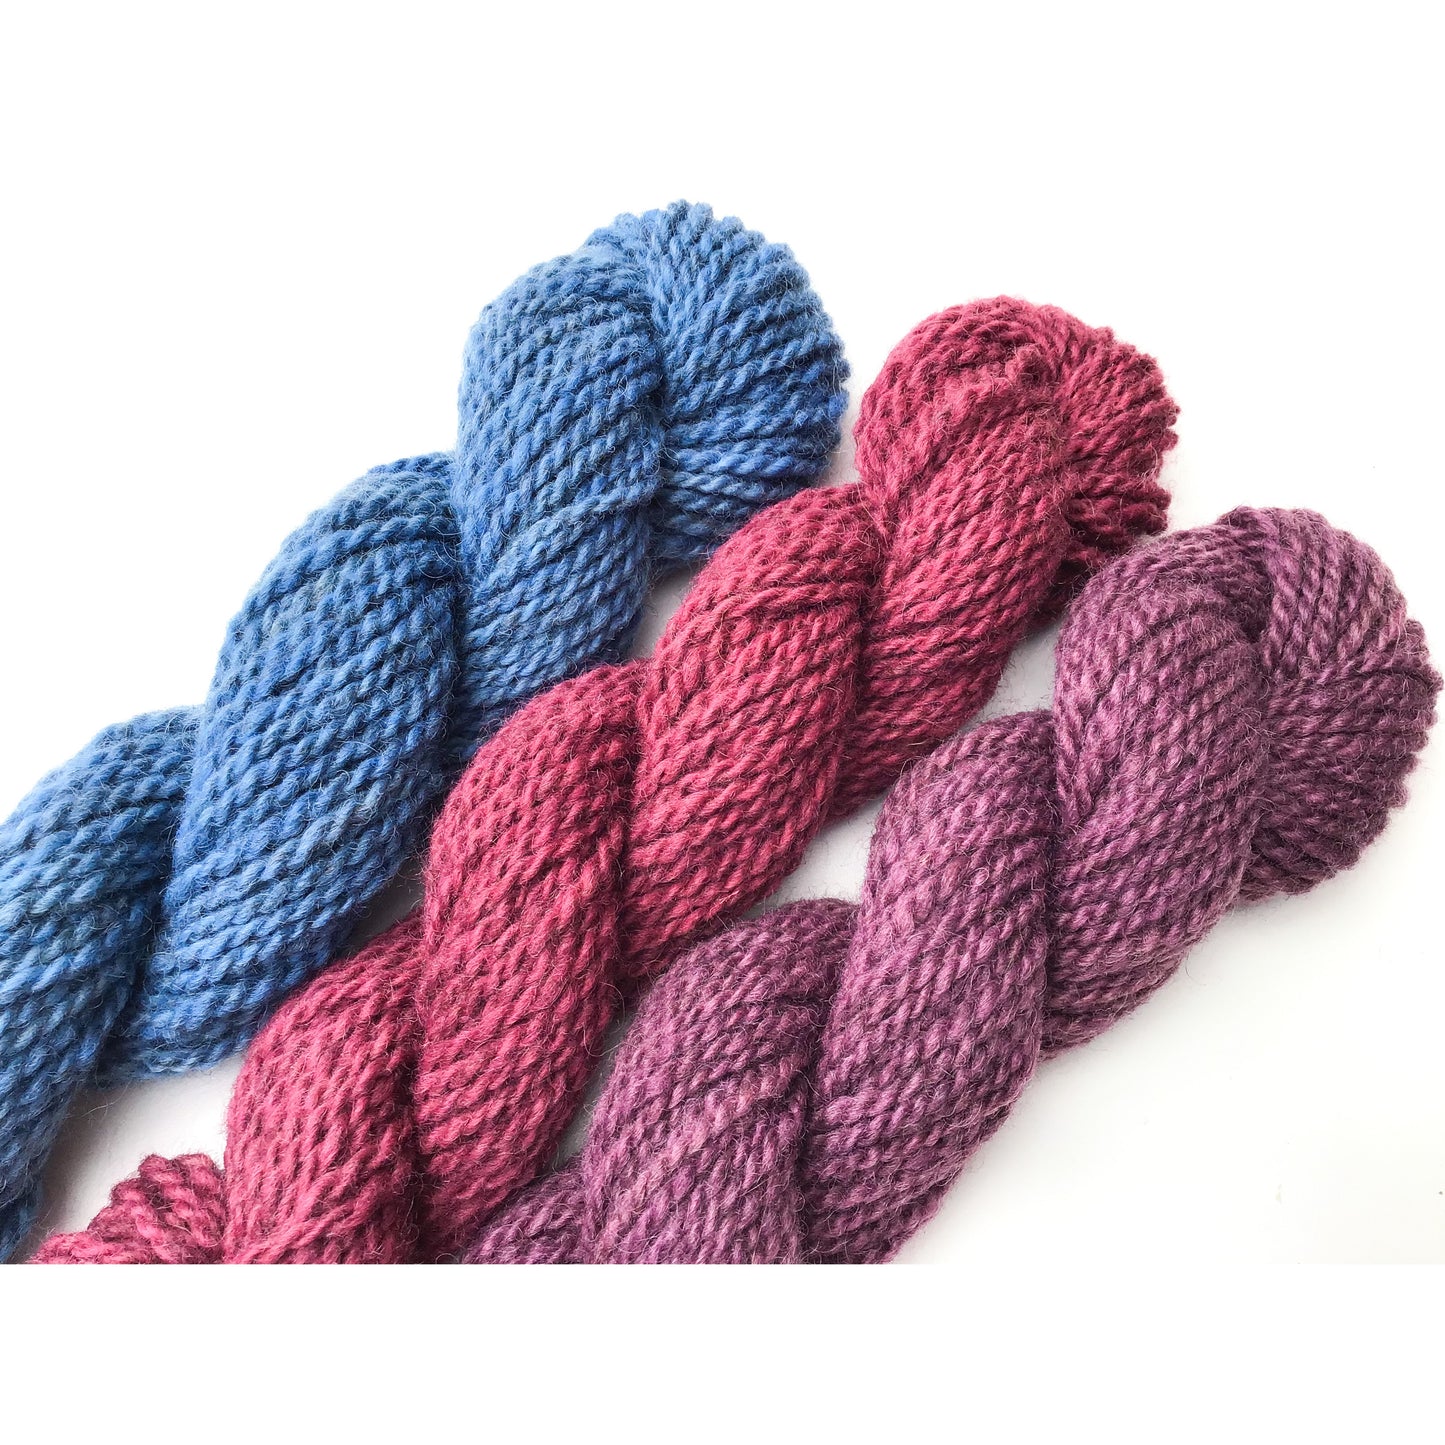 Gemstone Yarn Colorway - 2ply Hand-dyed Yarn - Worsted Weight